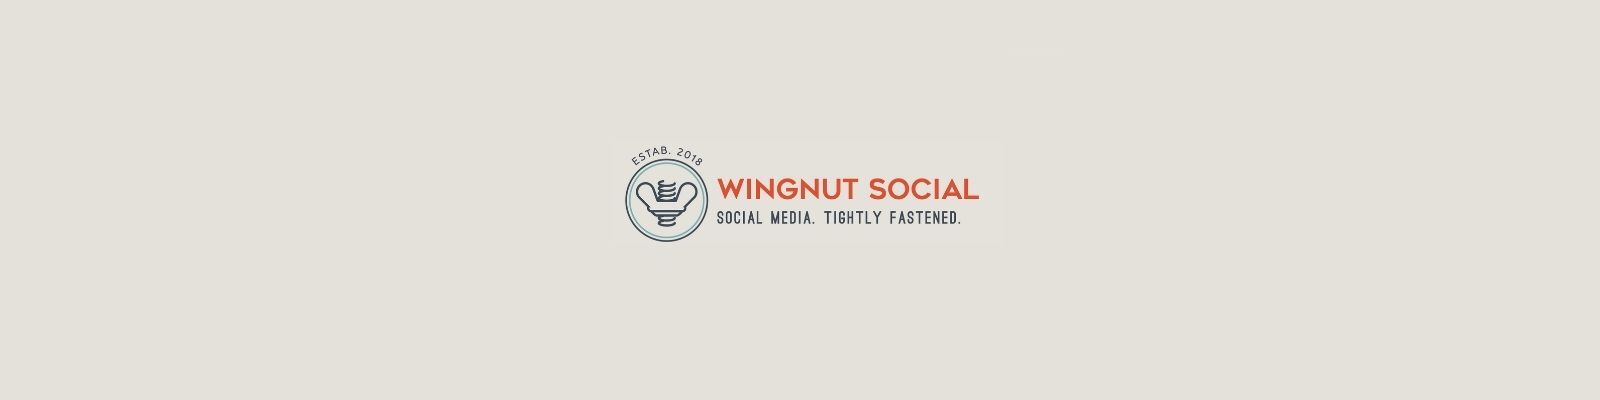 Designed by Wingnut Social | Interior Design Business